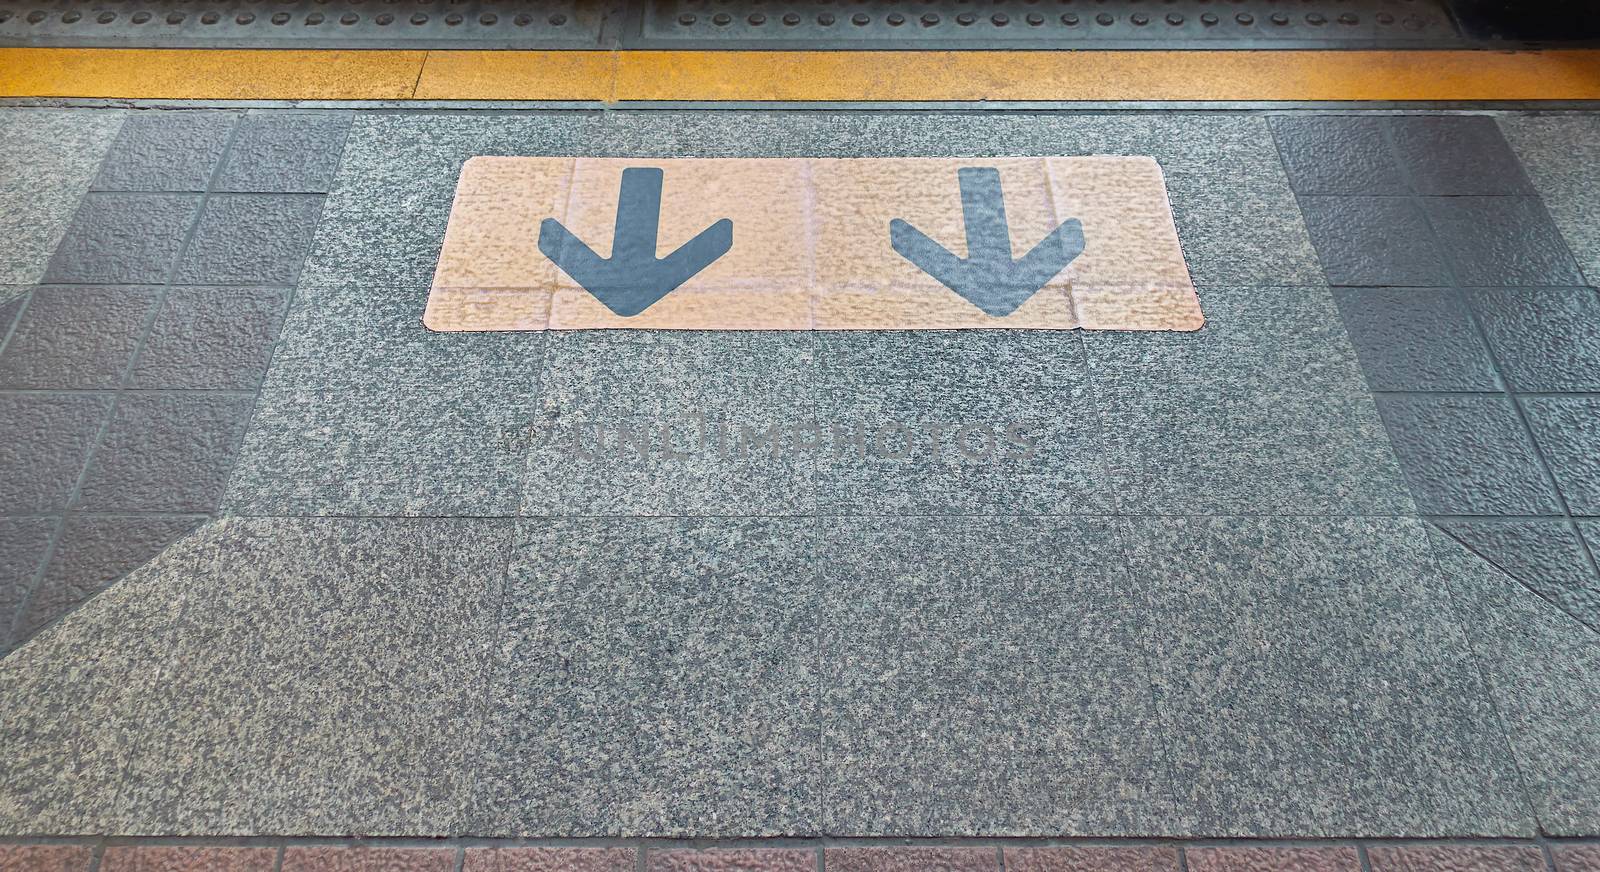 Yellow arrow direction points to exit of door sky train.